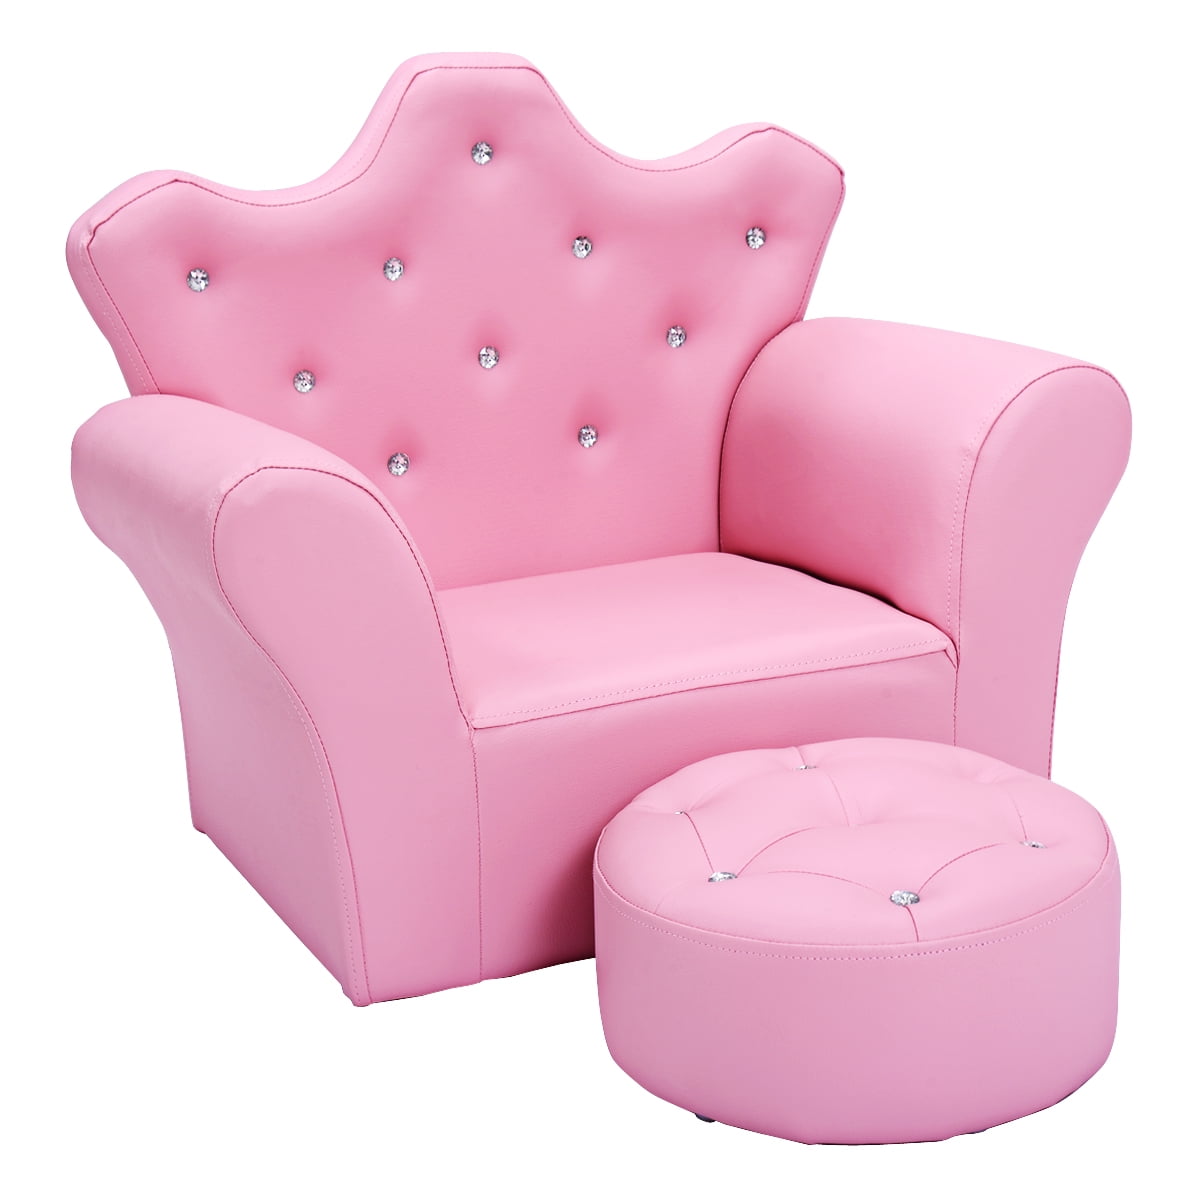 Costway Pink Kids Sofa Armrest Chair Couch Children Toddler Birthday Gift W Ottoman Walmart Com Walmart Com